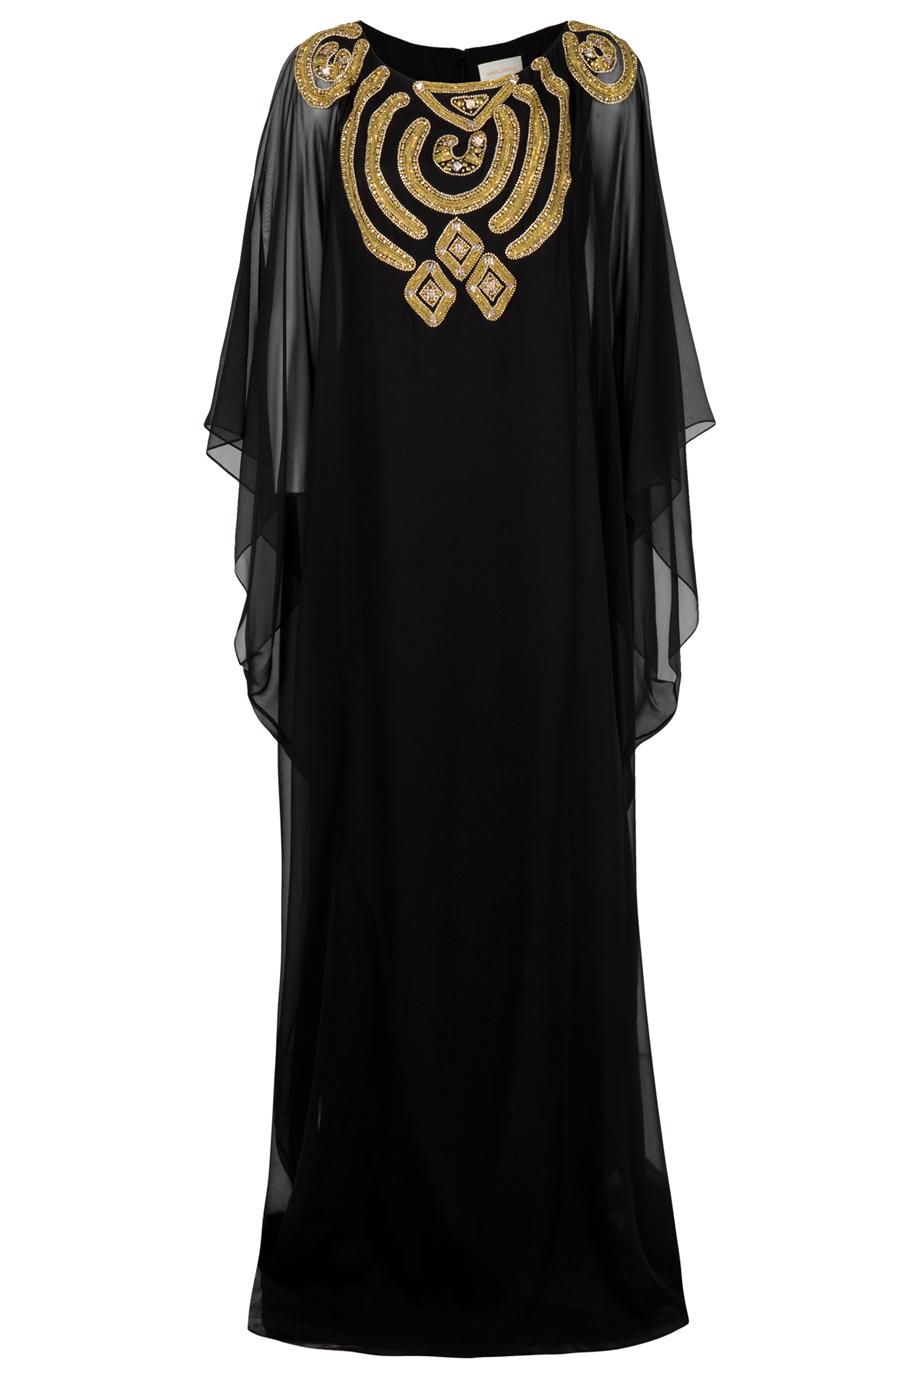 Lyst - Marchesa Embellished Kaftan Gown in Black